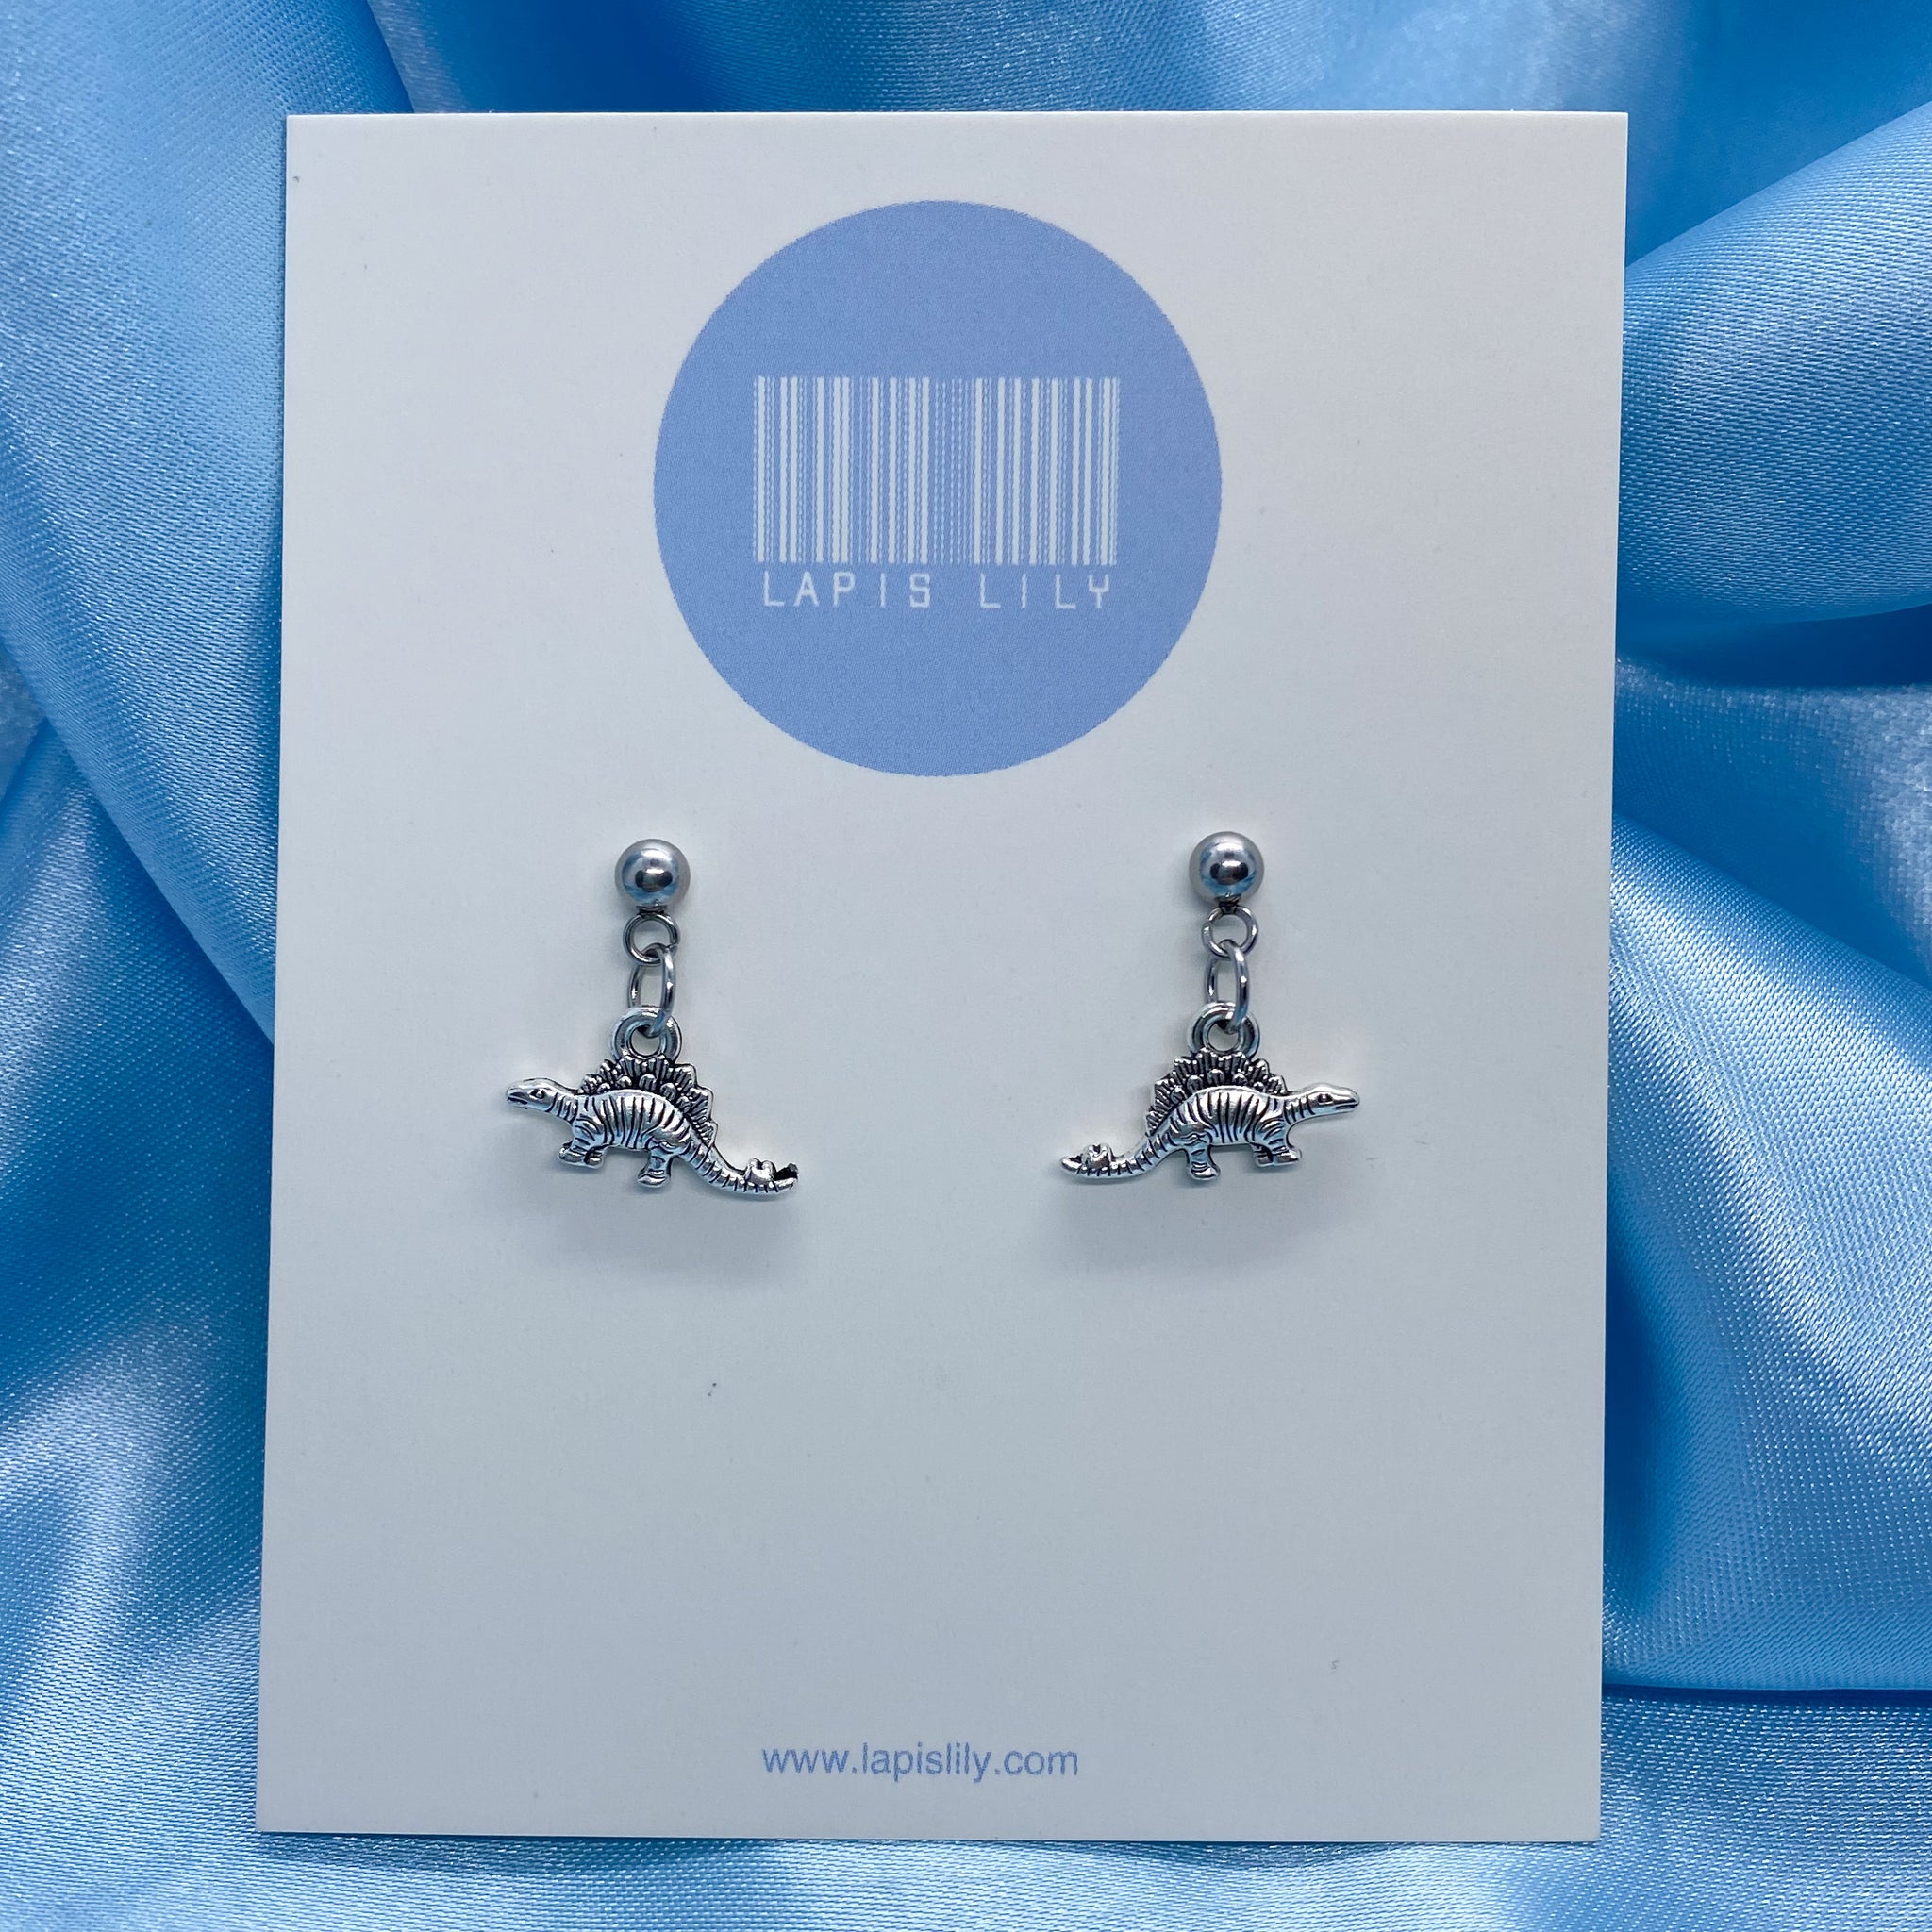 Mini metal dinosaur stud earrings with stainless steel studs or clip ons